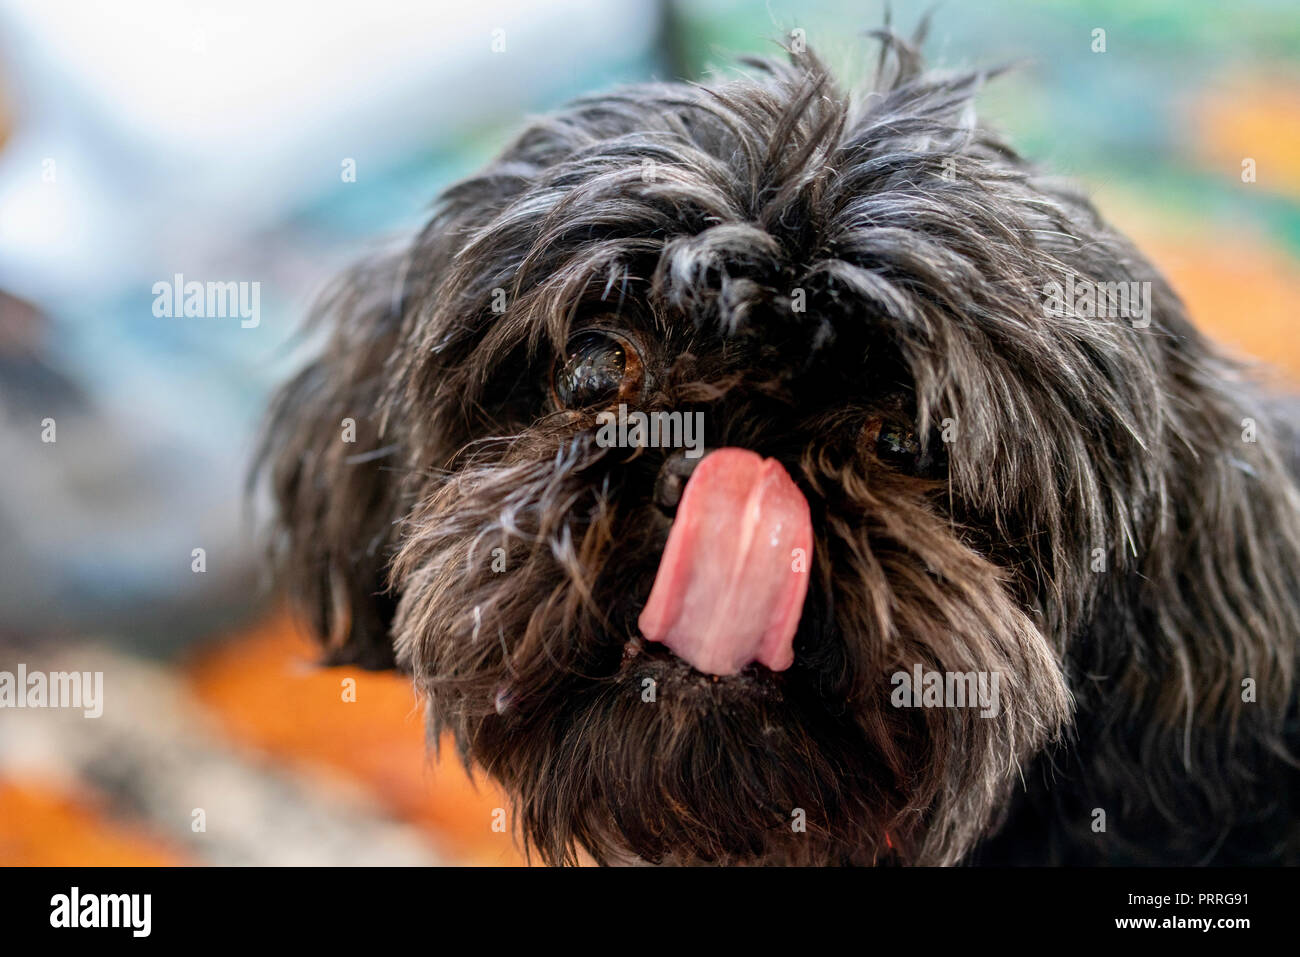 Black dog with long hair dog licking nose Stock Photo